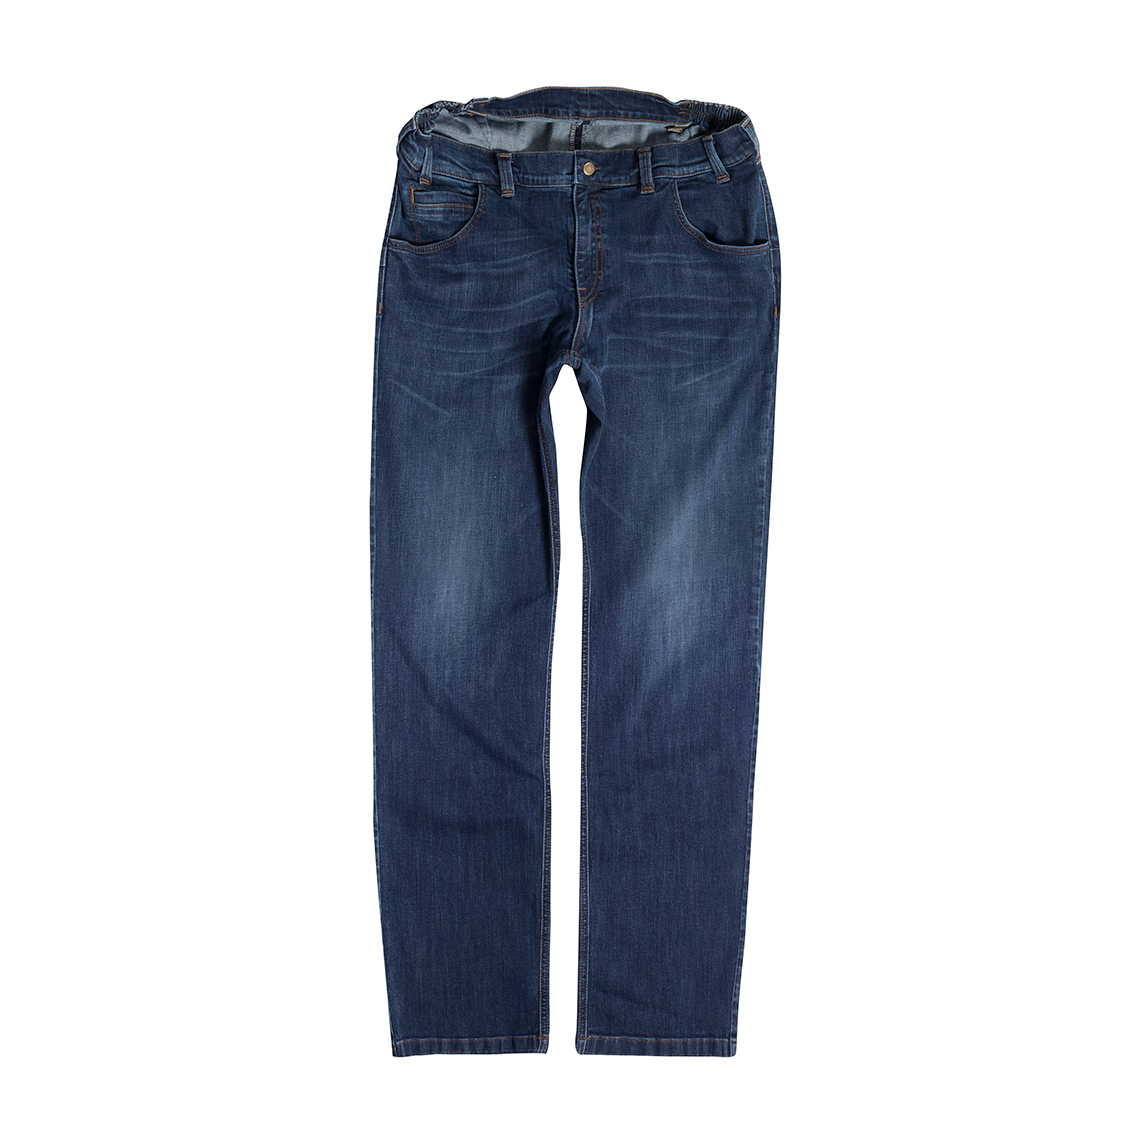 Herren Jeans  Fashion washed, blau MIKE 10391 58